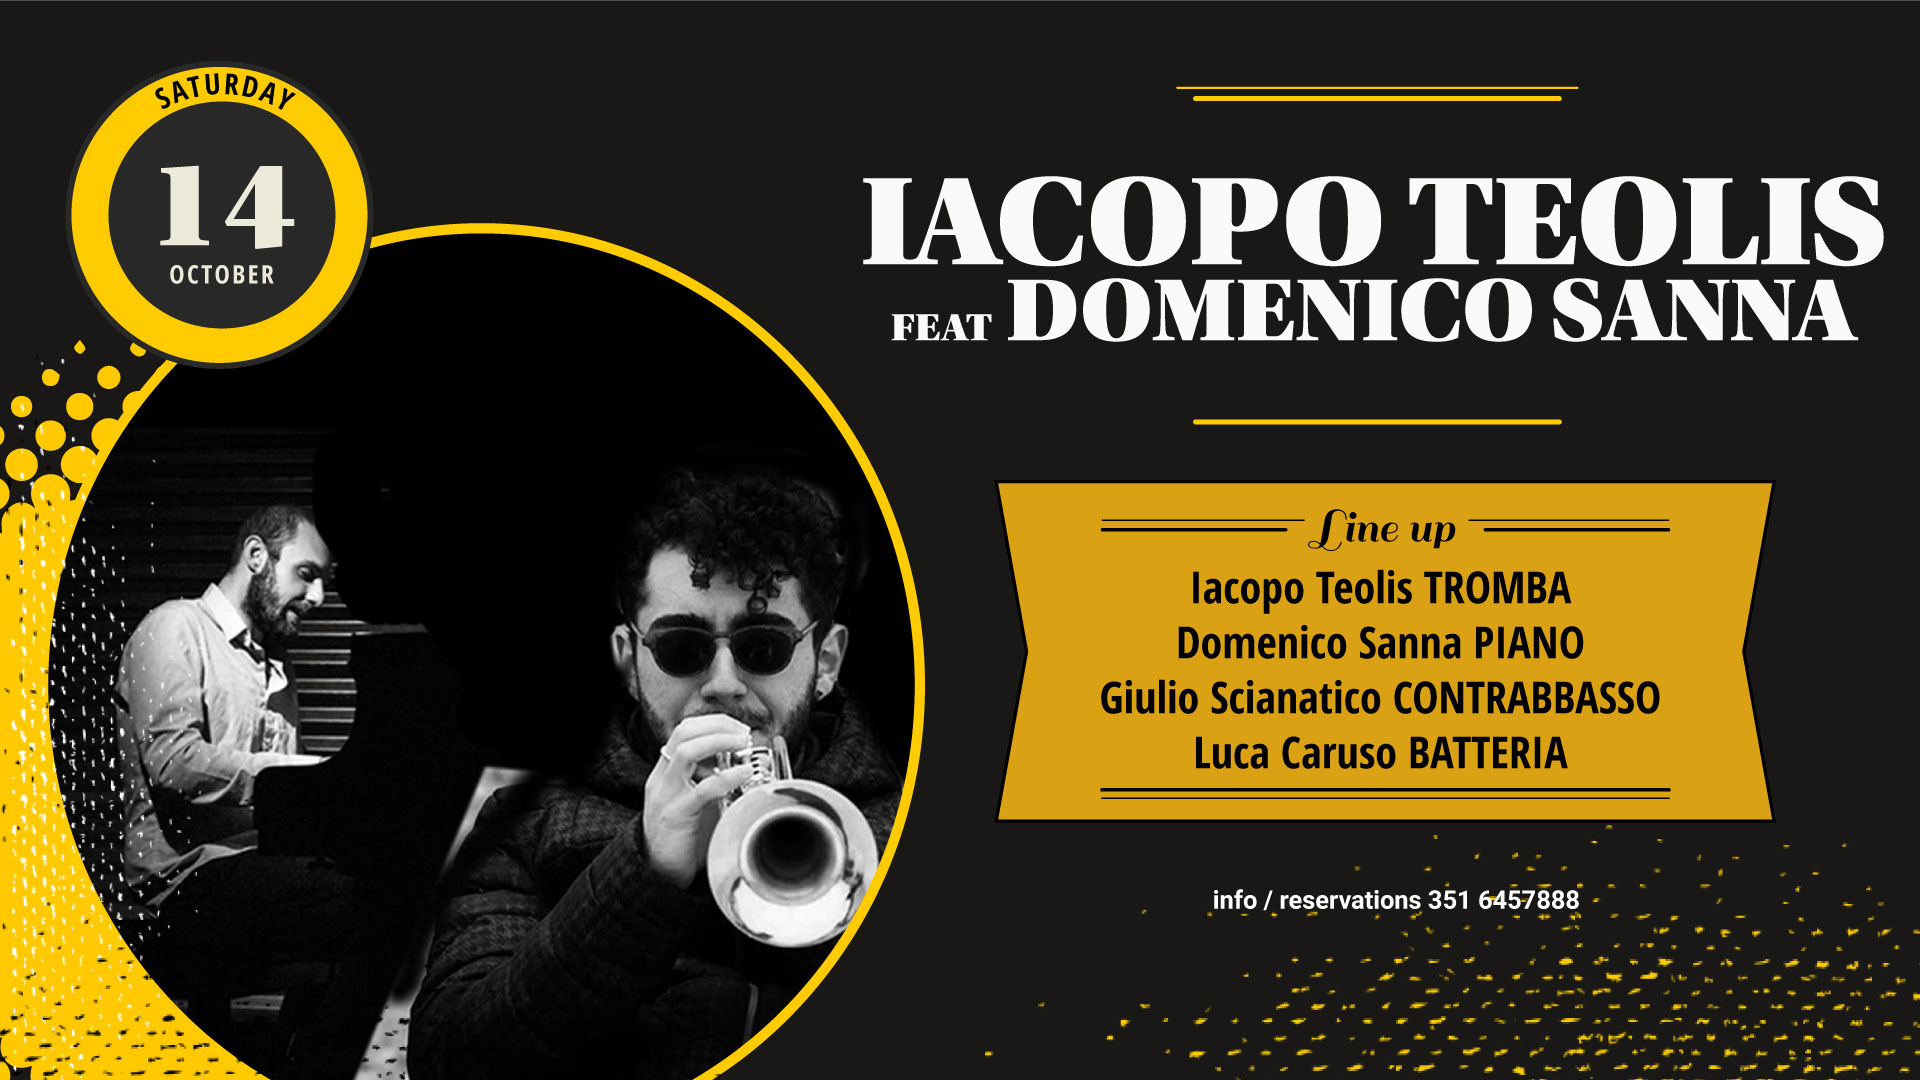 IacopoTeolis feat Domenico Sanna